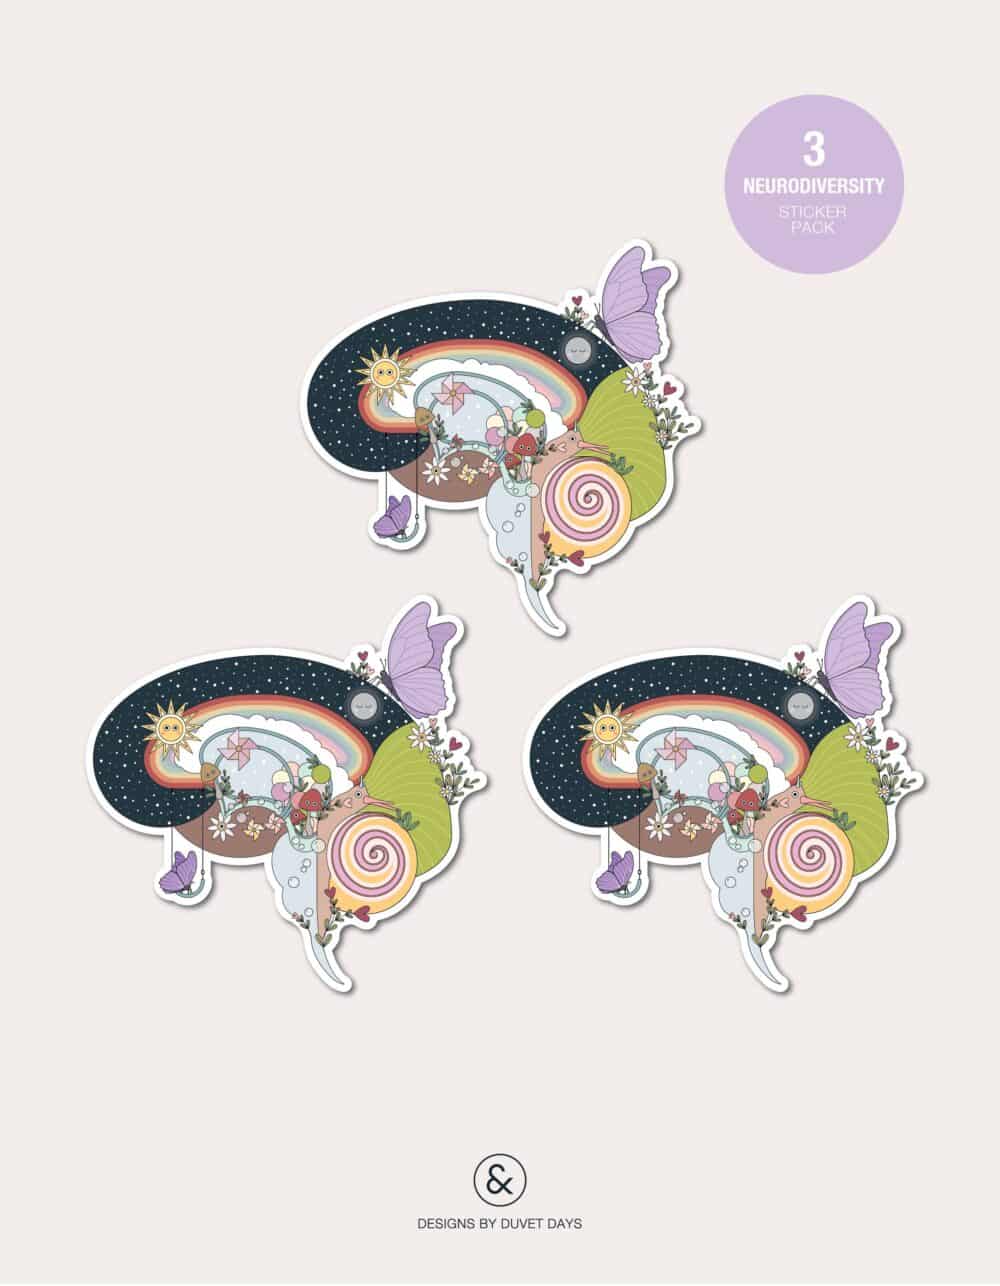 Duvet Days_Anatomy Illustrations_8.5x11_Neurodiversity Stickers 3 Pack-04